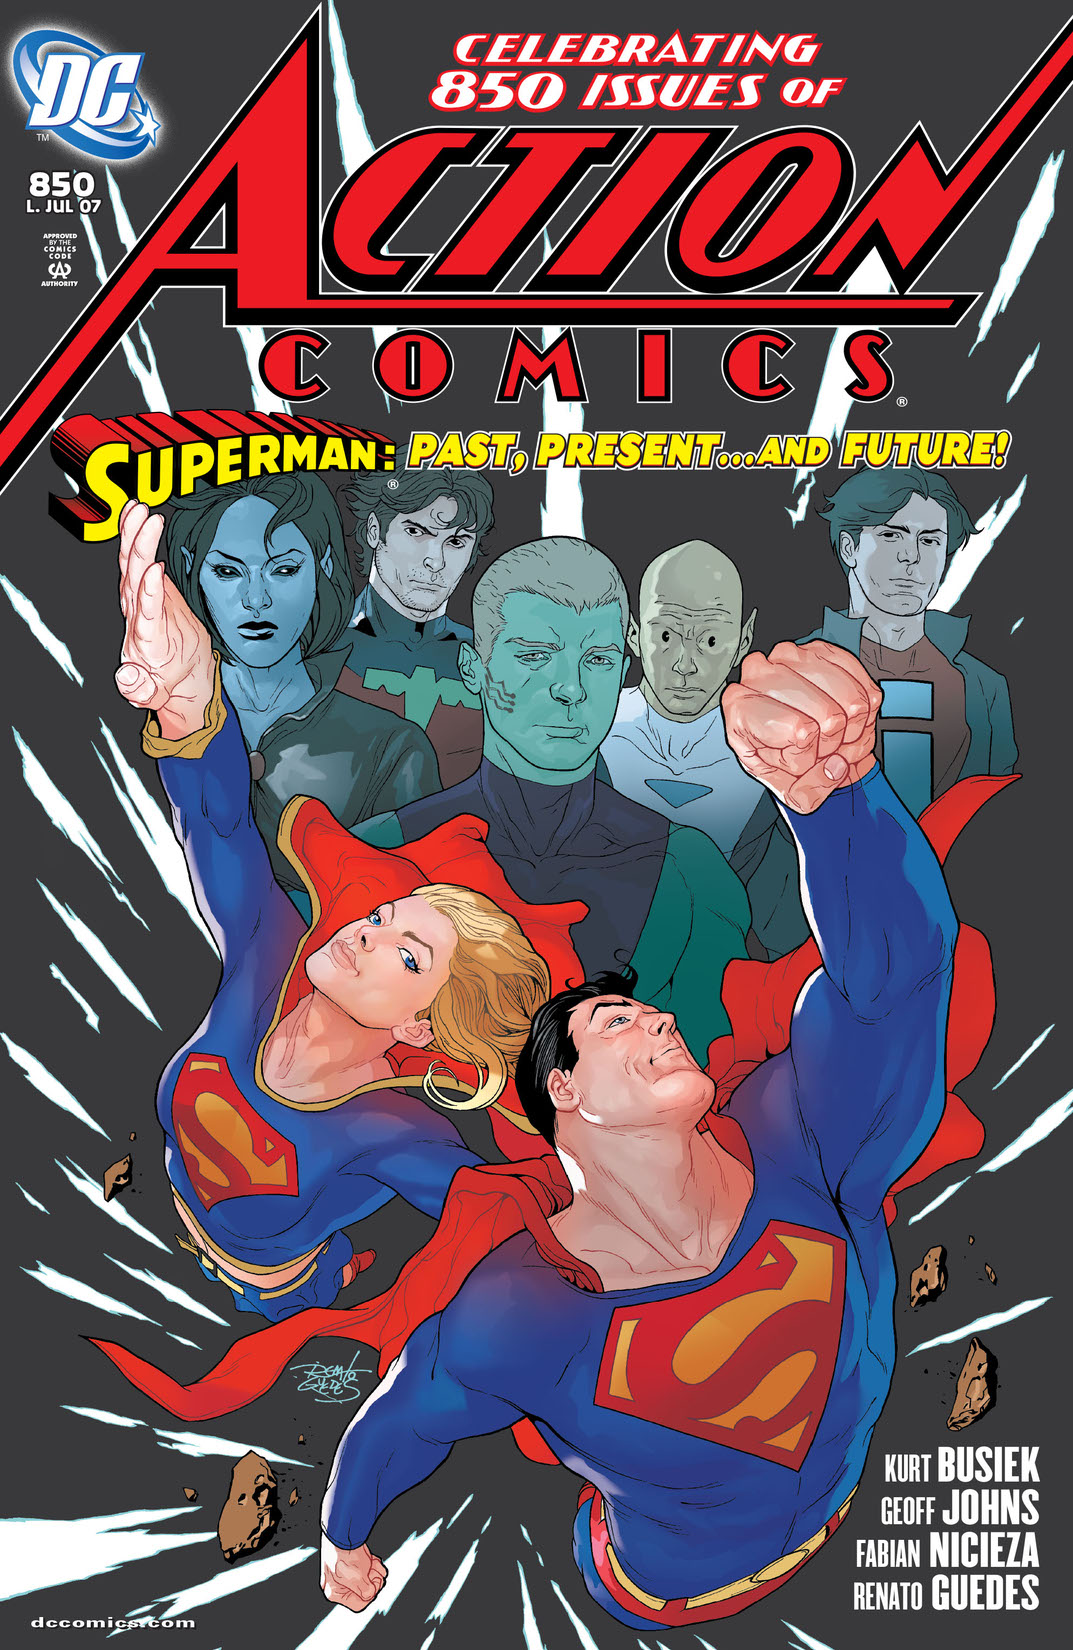 Action Comics (2010-) #850 preview images